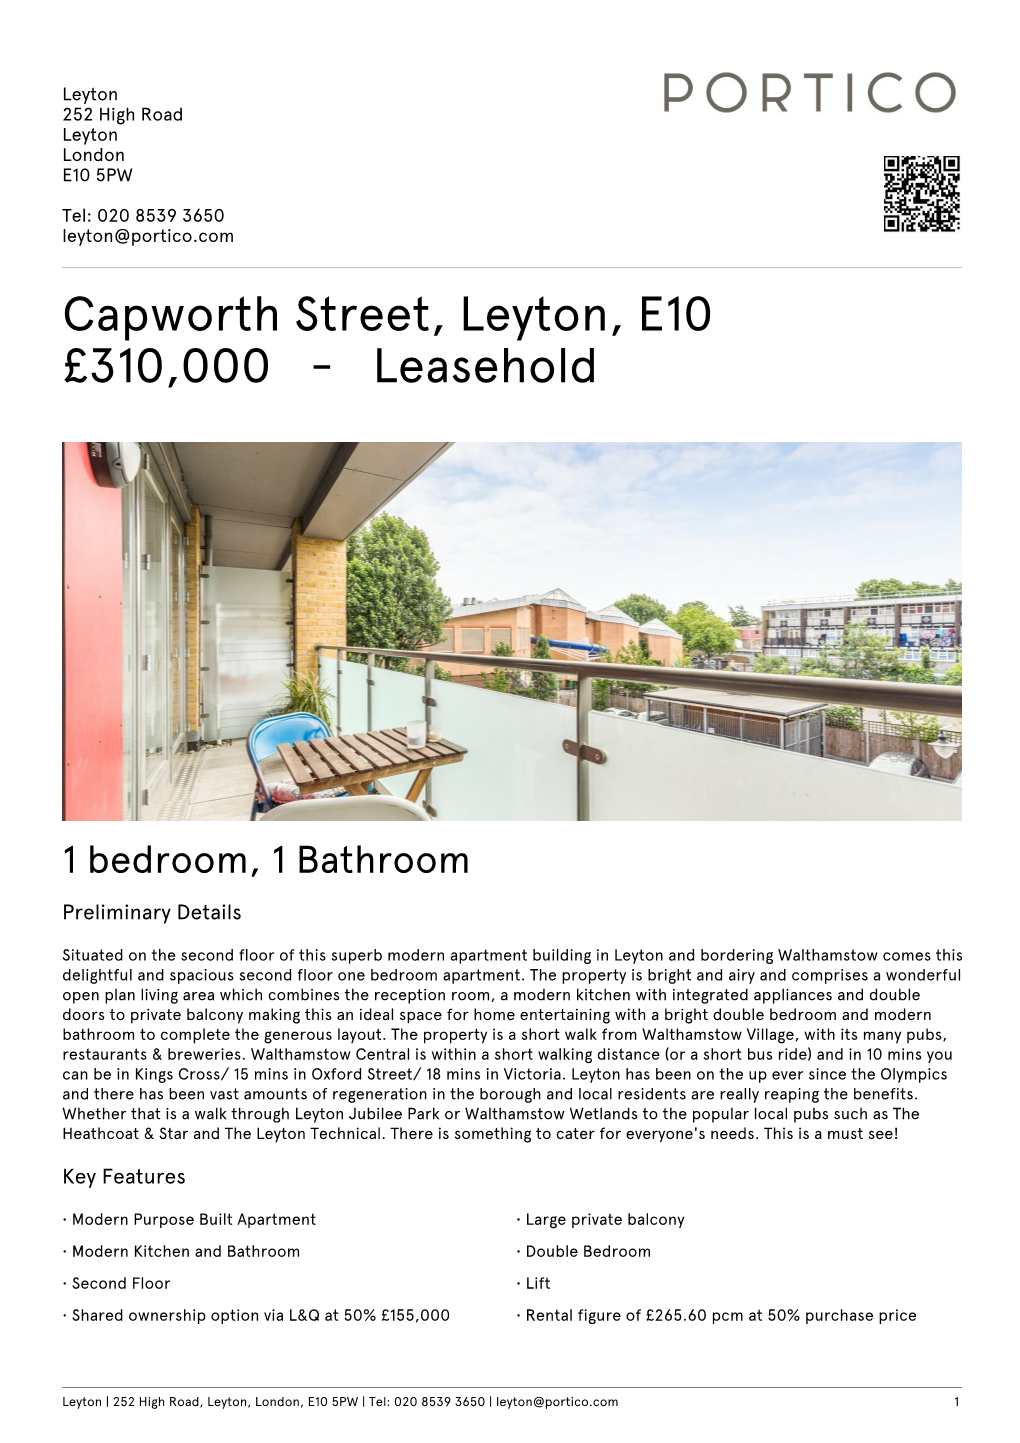 Capworth Street, Leyton, E10 £310,000